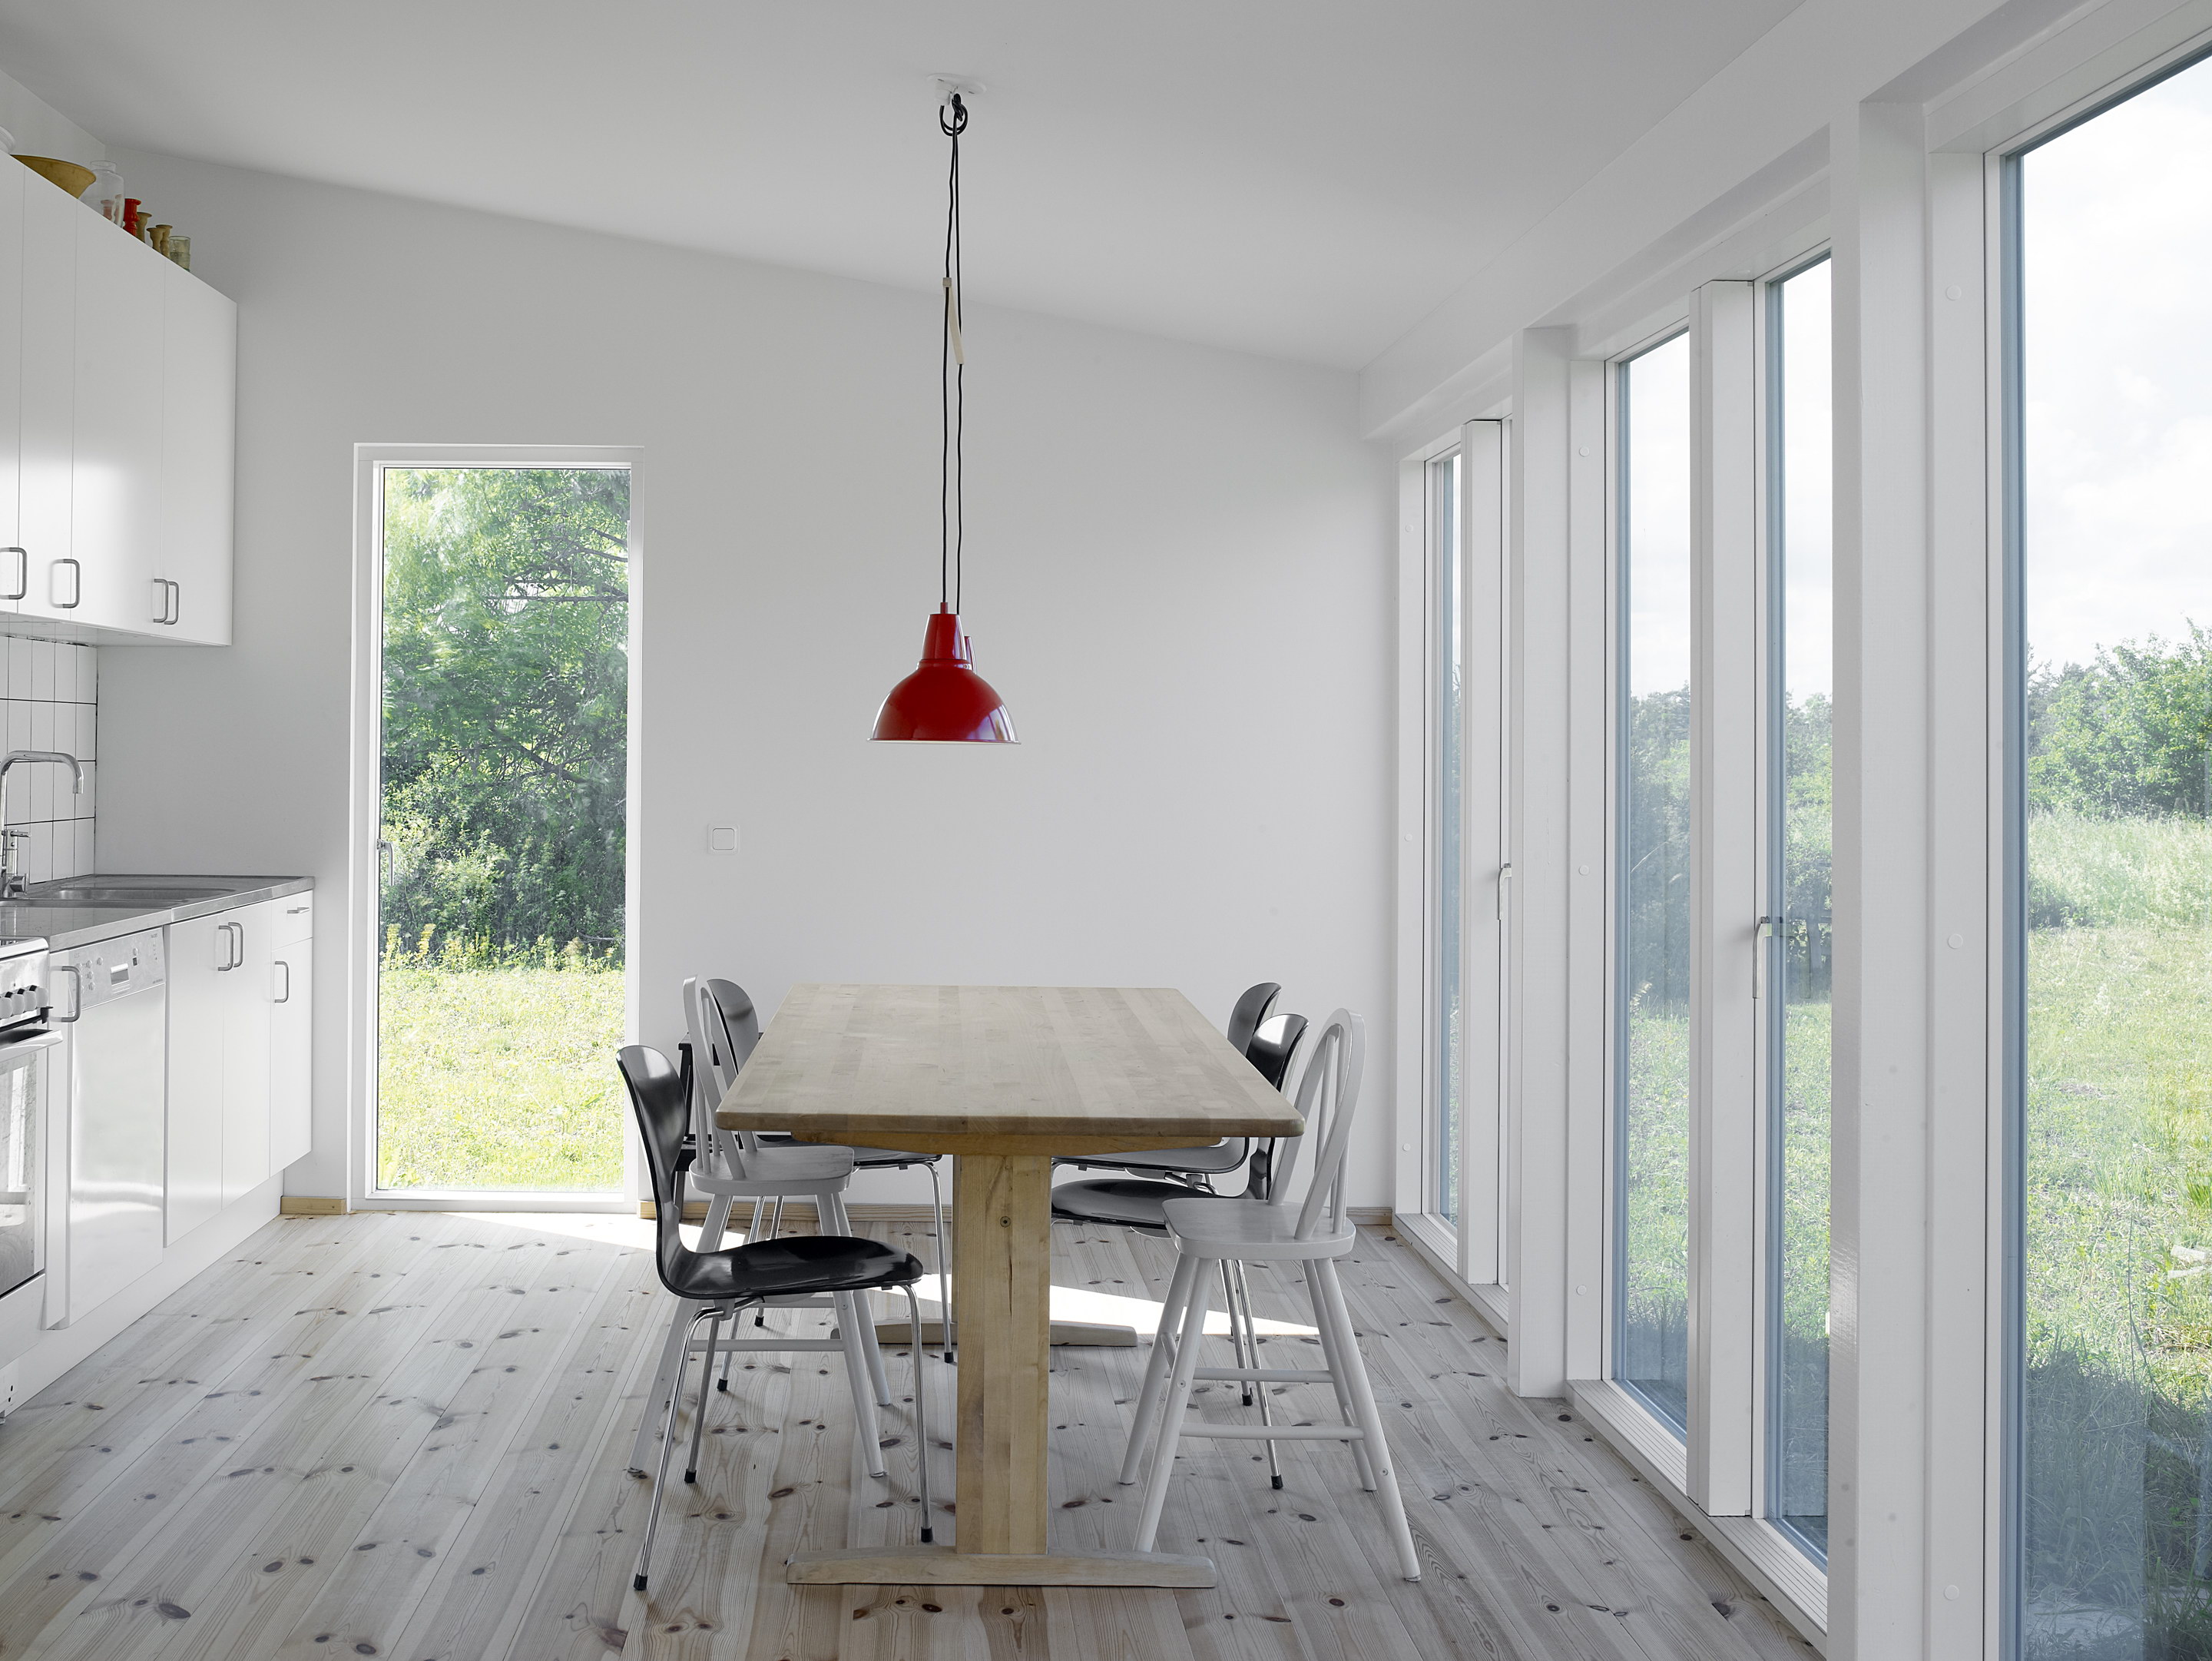 Gammelgarn Mattsarve – Small Summerhouse by LLP Arkitektkontor